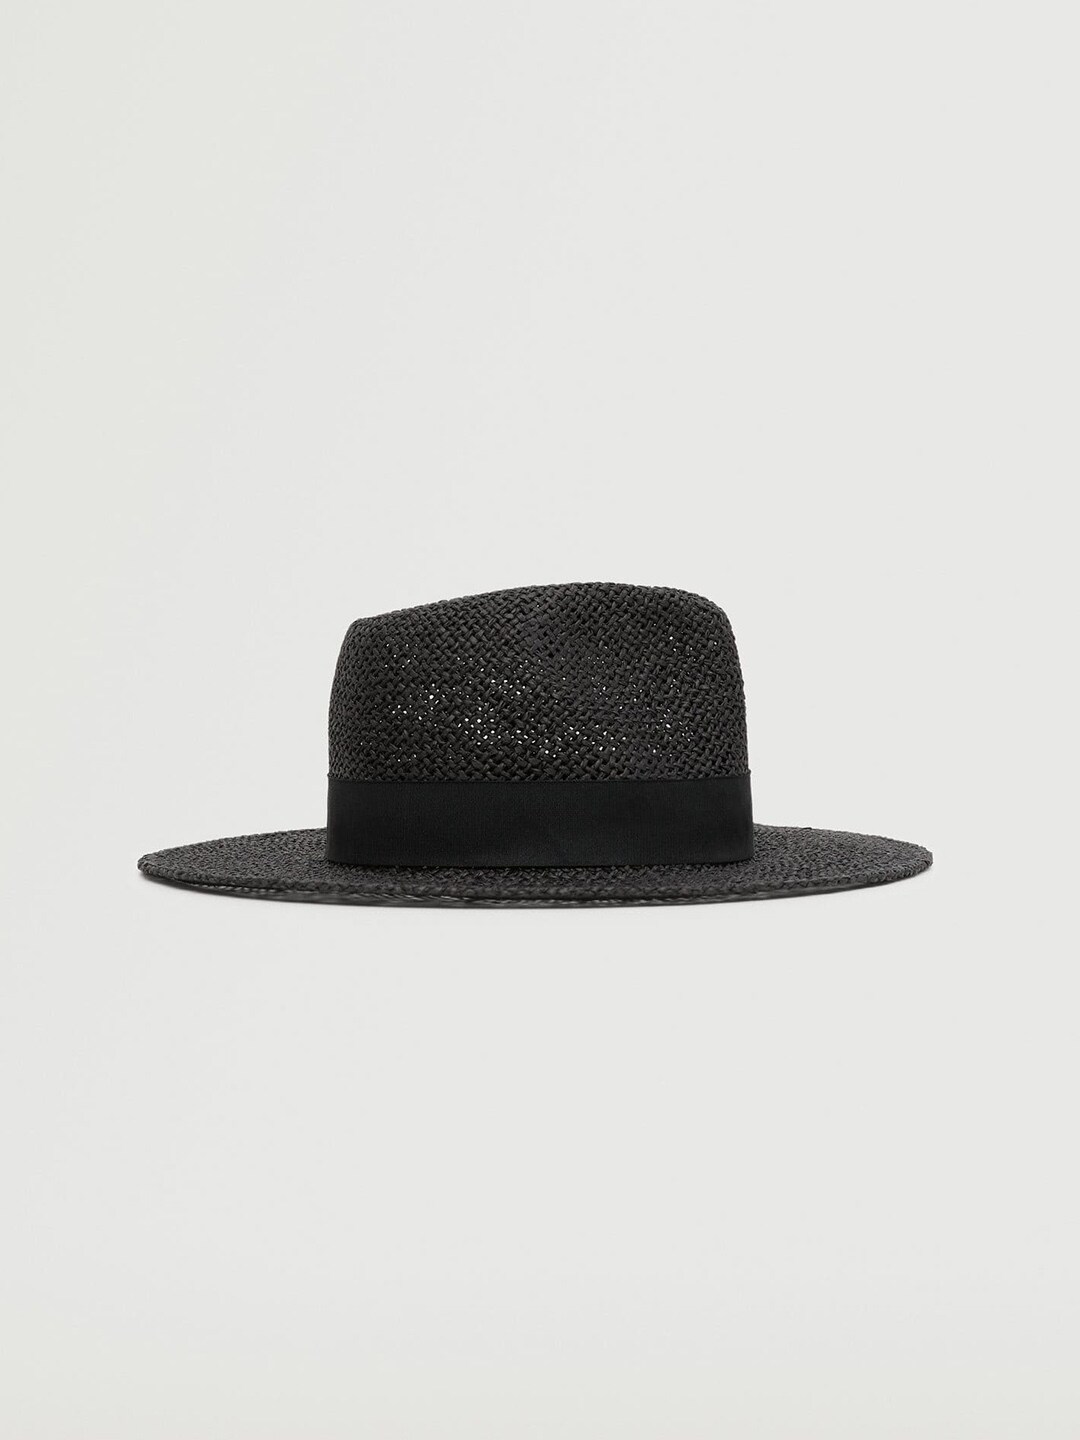 MANGO Women Charcoal Grey & Black Raffia Woven Bucket Hat Price in India